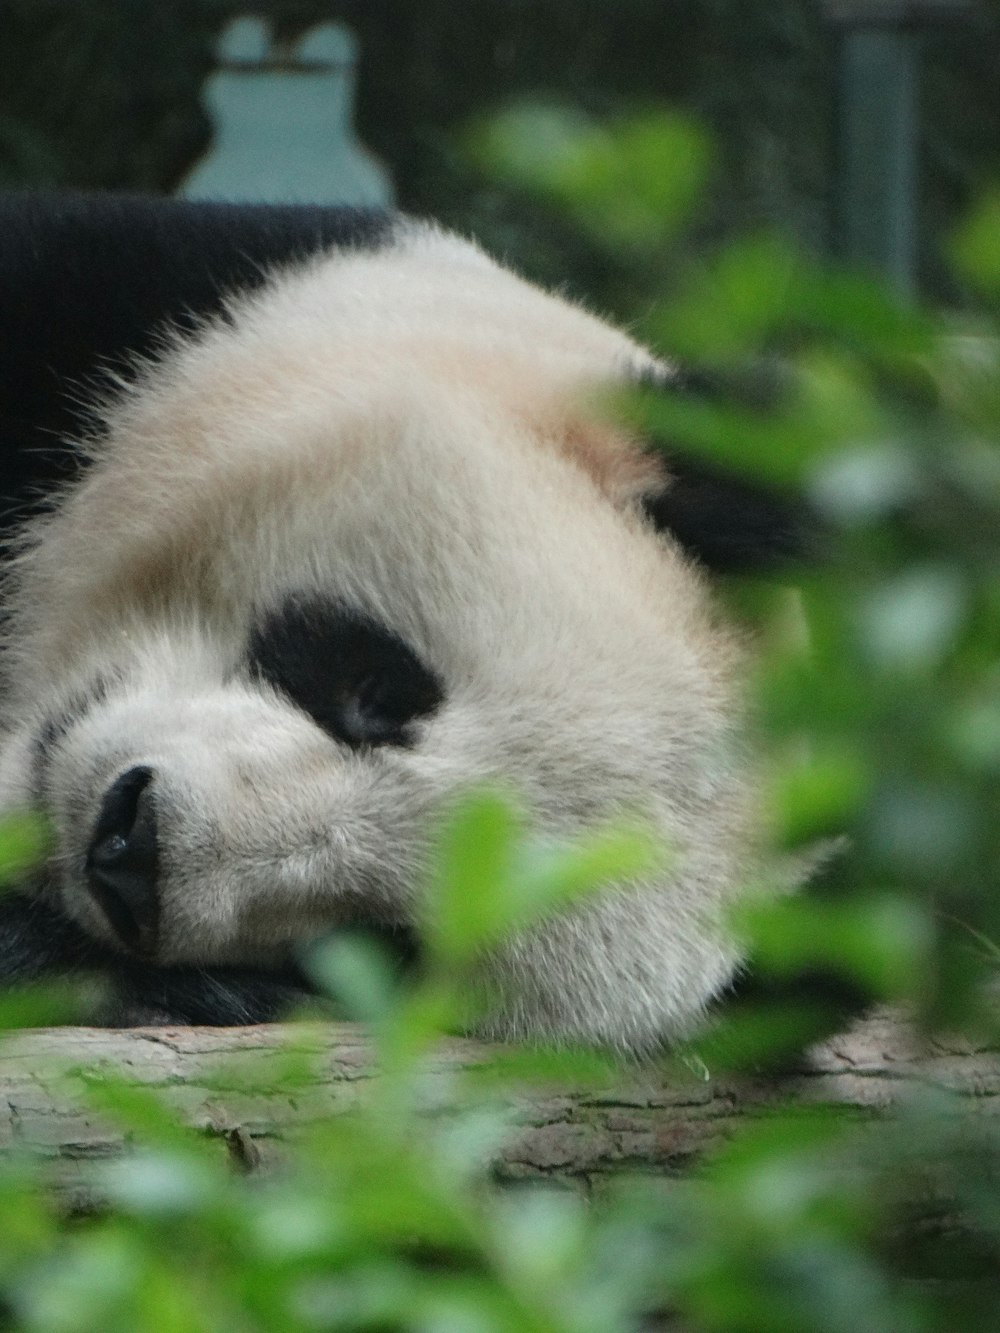 a panda bear sleeping on a tree branch